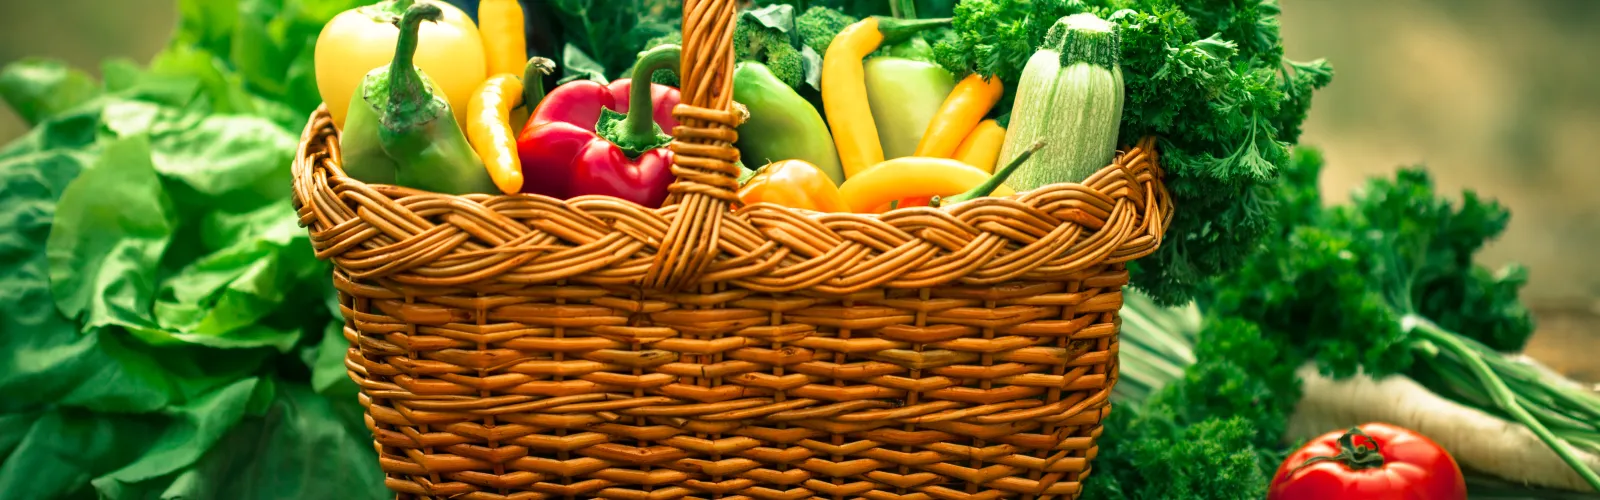 Garden veggies and herbs in a basket